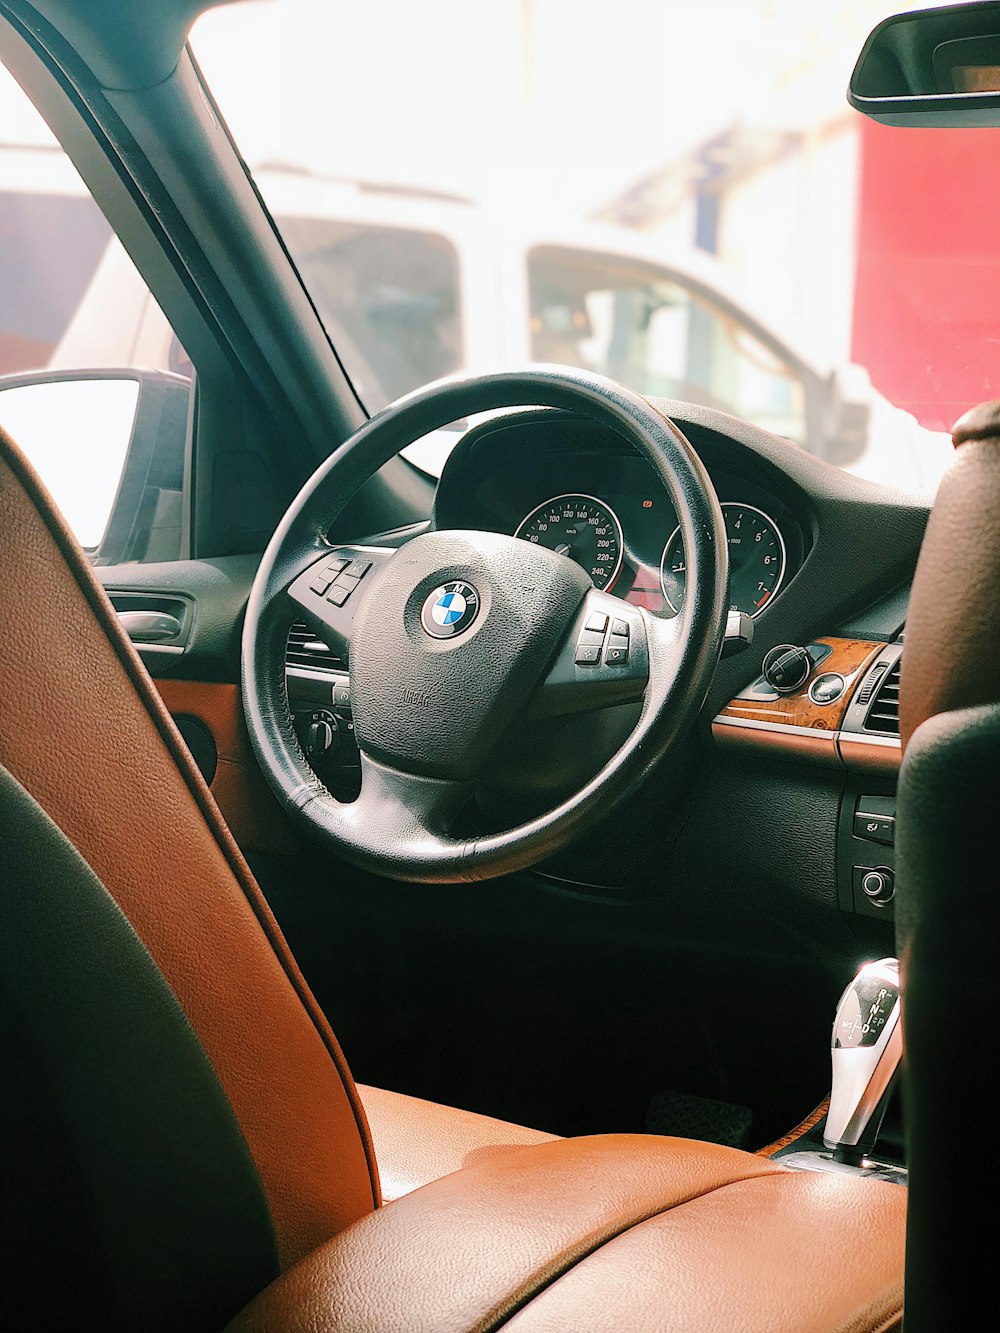 BMW vehicle interior near white van at daytime